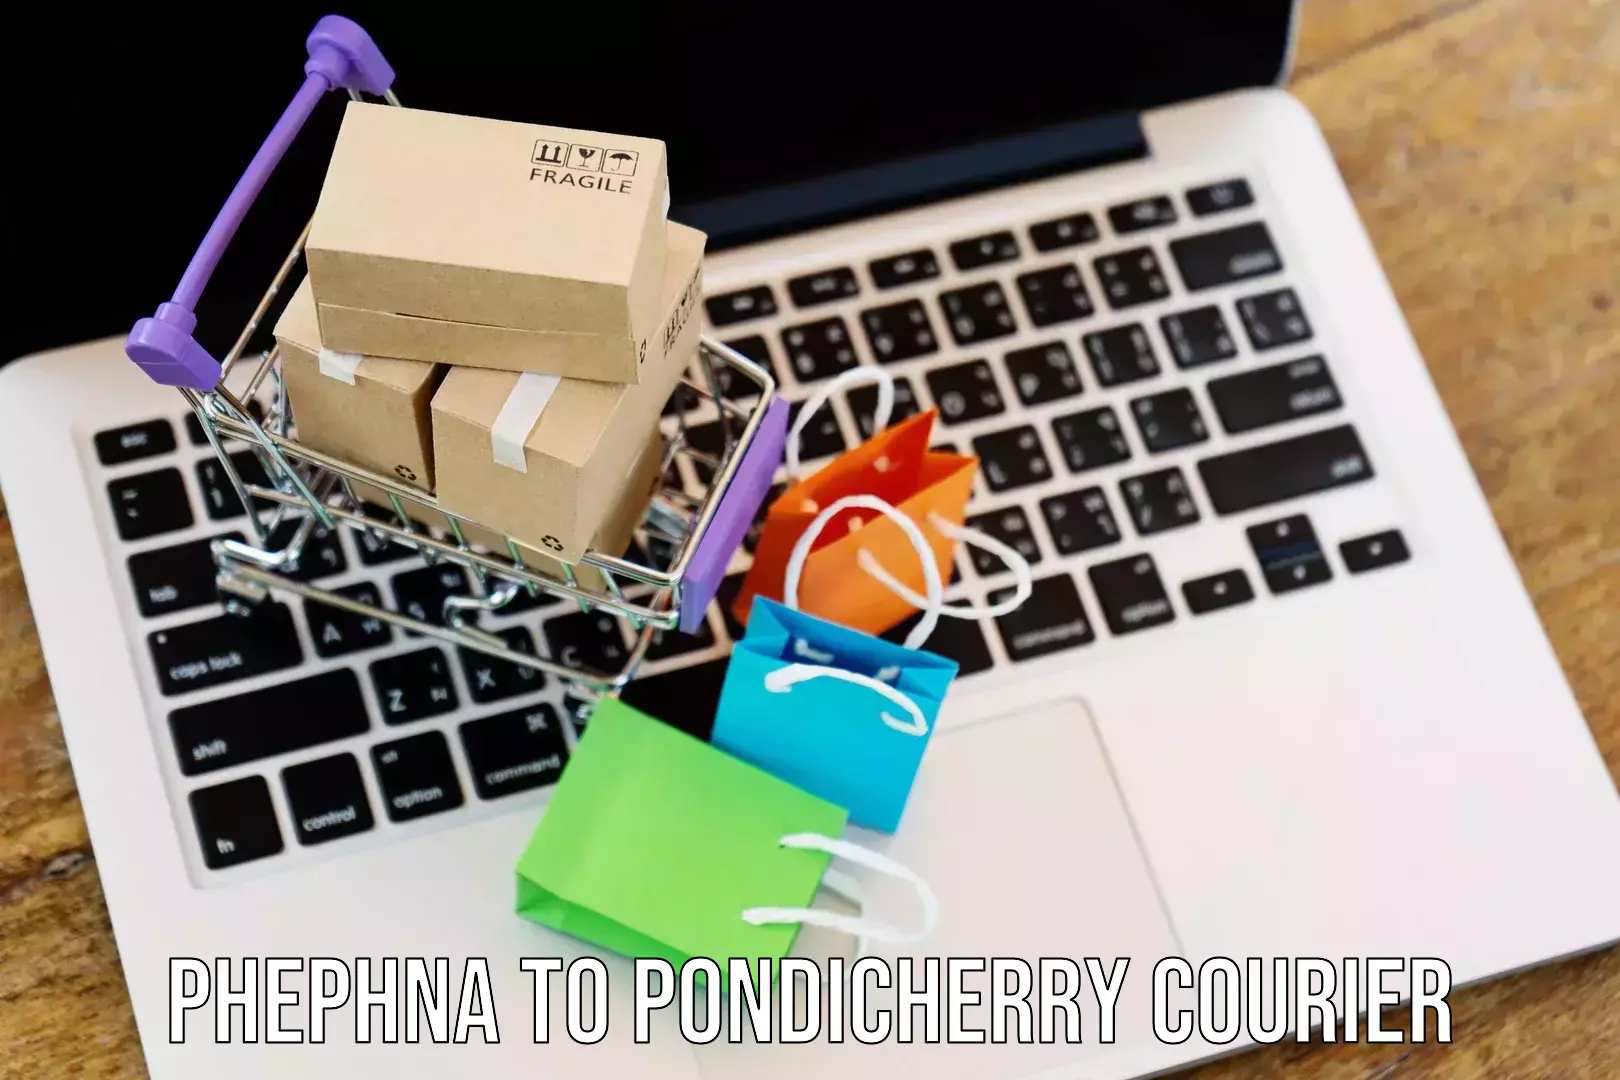 User-friendly delivery service Phephna to Pondicherry